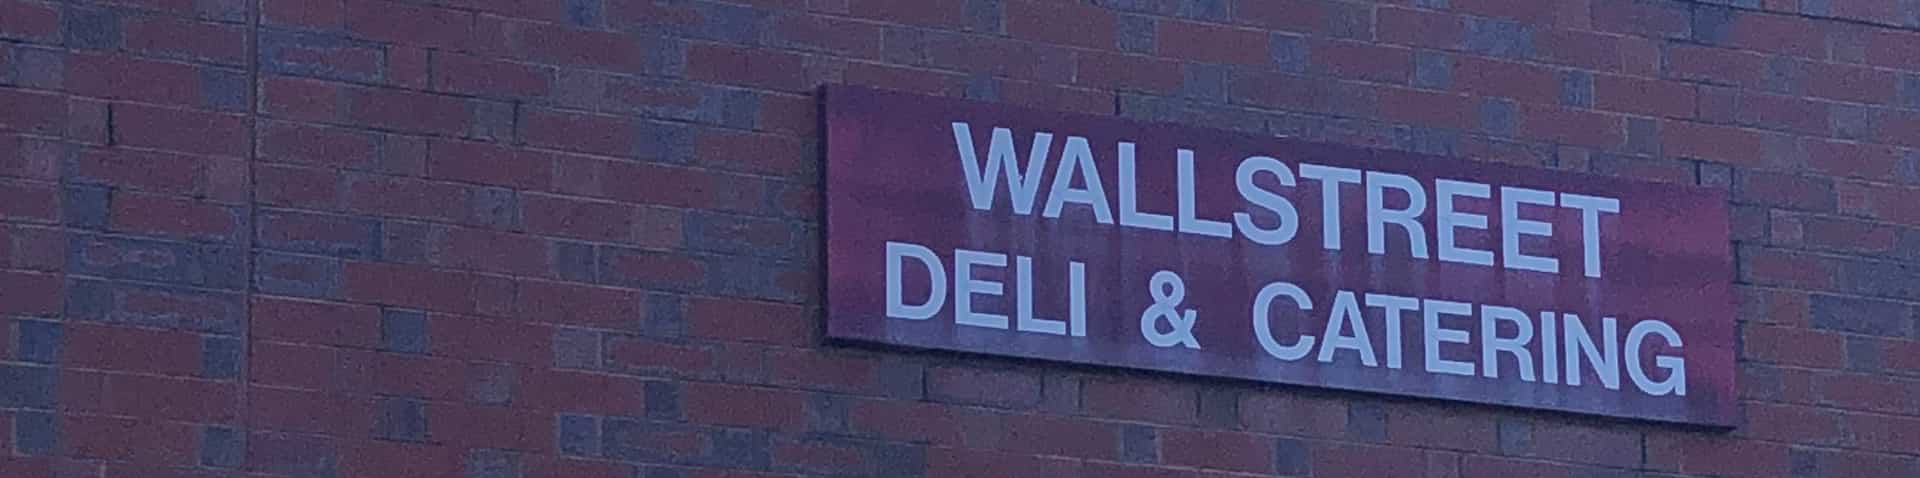 restaurant sign on building